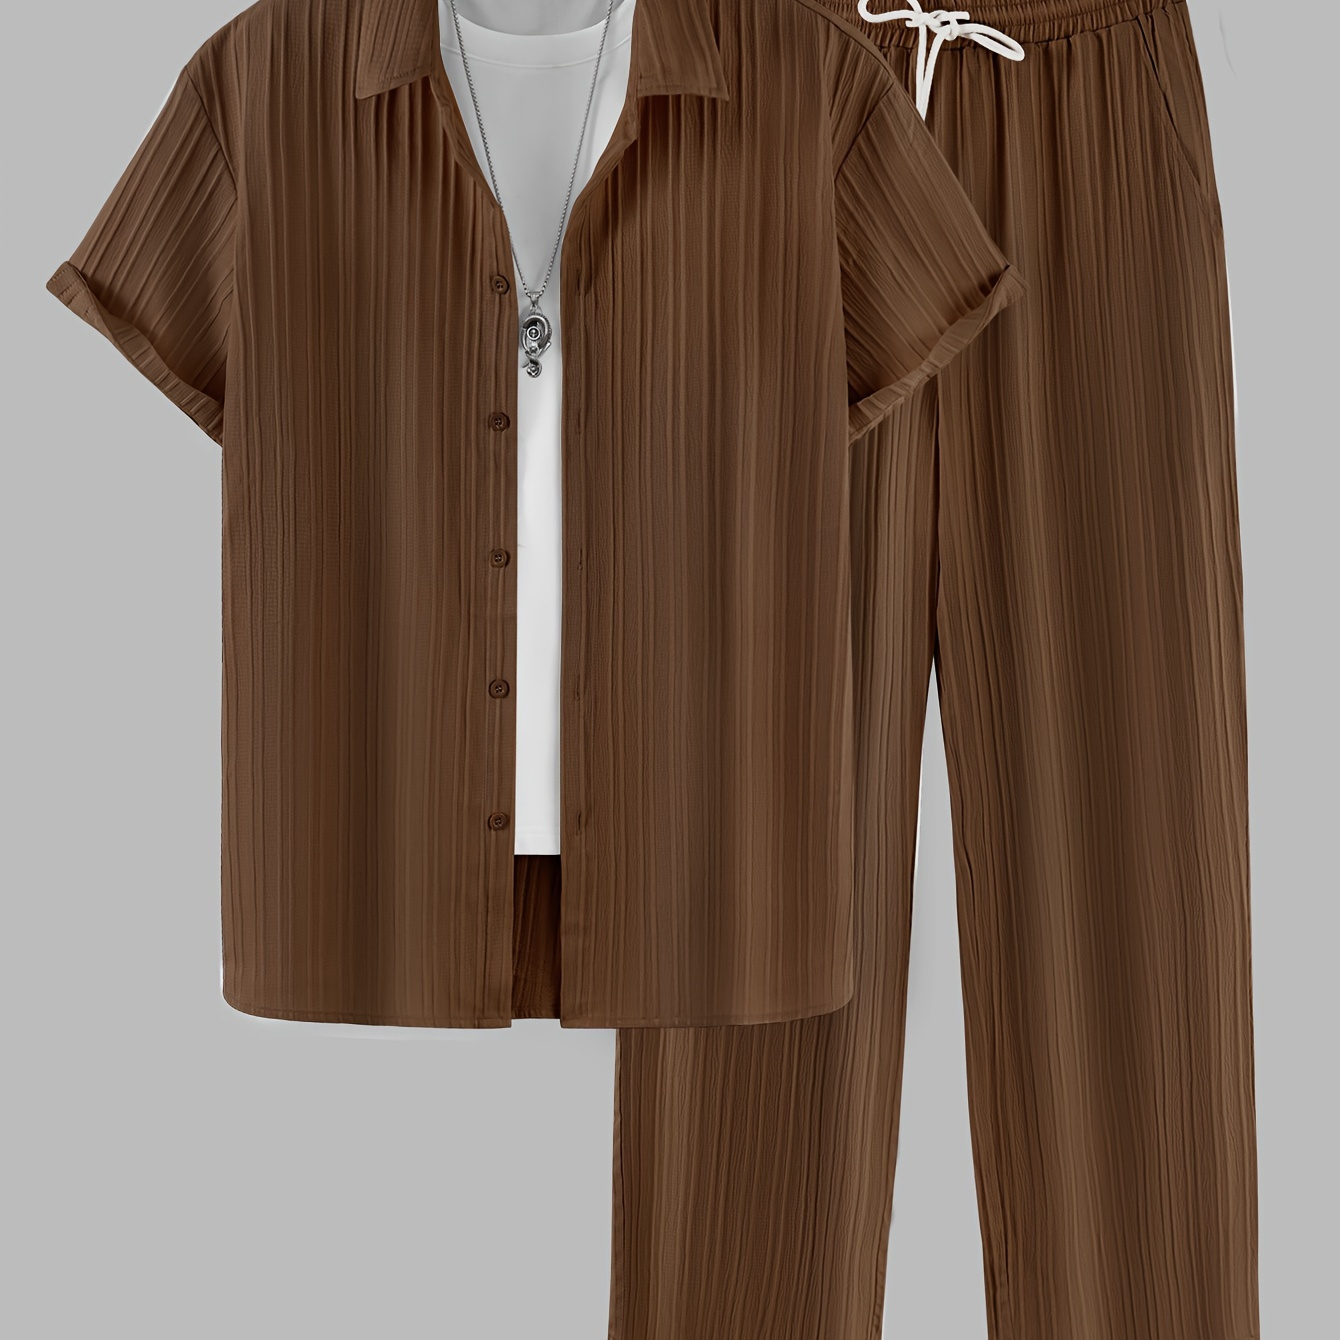 

2-piece Men's Stylish Spring Summer Vacation Outfit Set, Men's Short Sleeve Lapel Shirt & Drawstring Long Pants Set